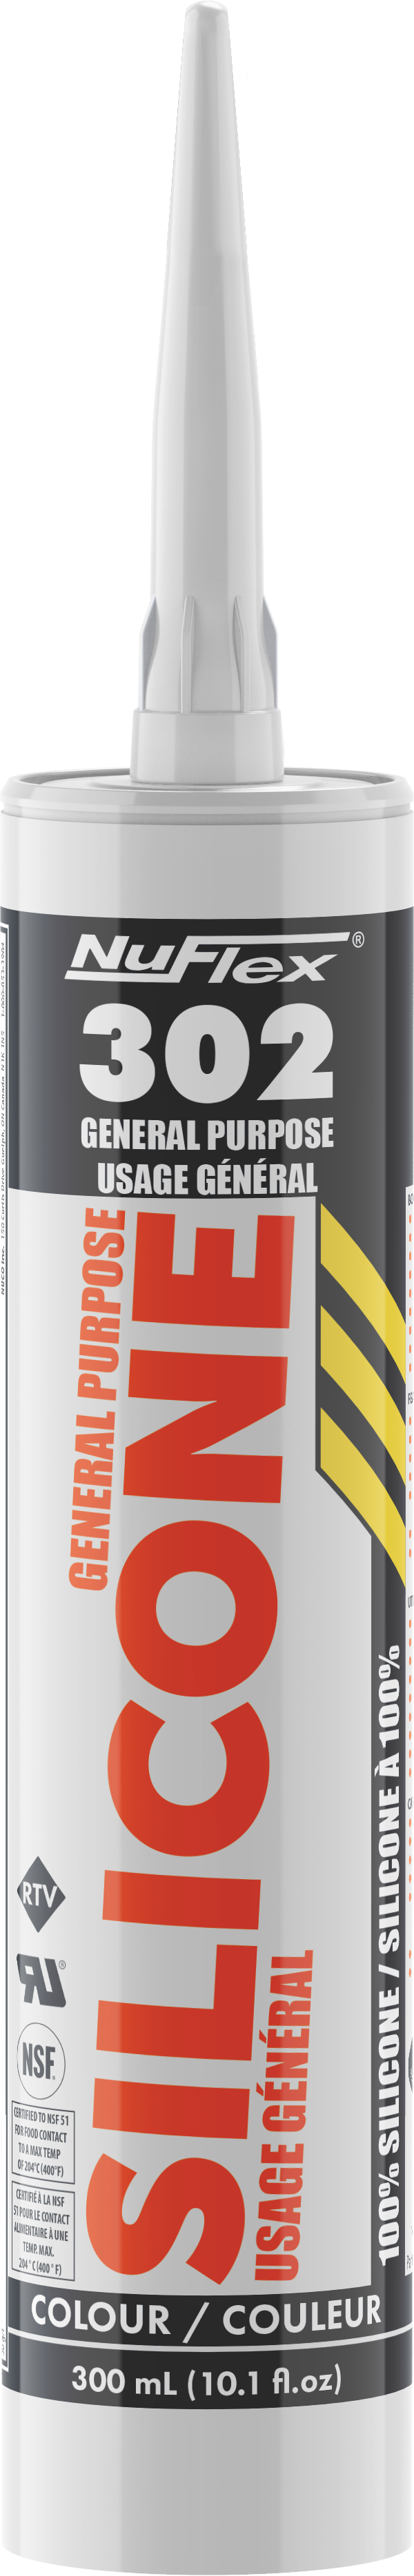 NuFlex 302 General Purpose Silicone Sealant Mid Brown - Cartridge 300 ml